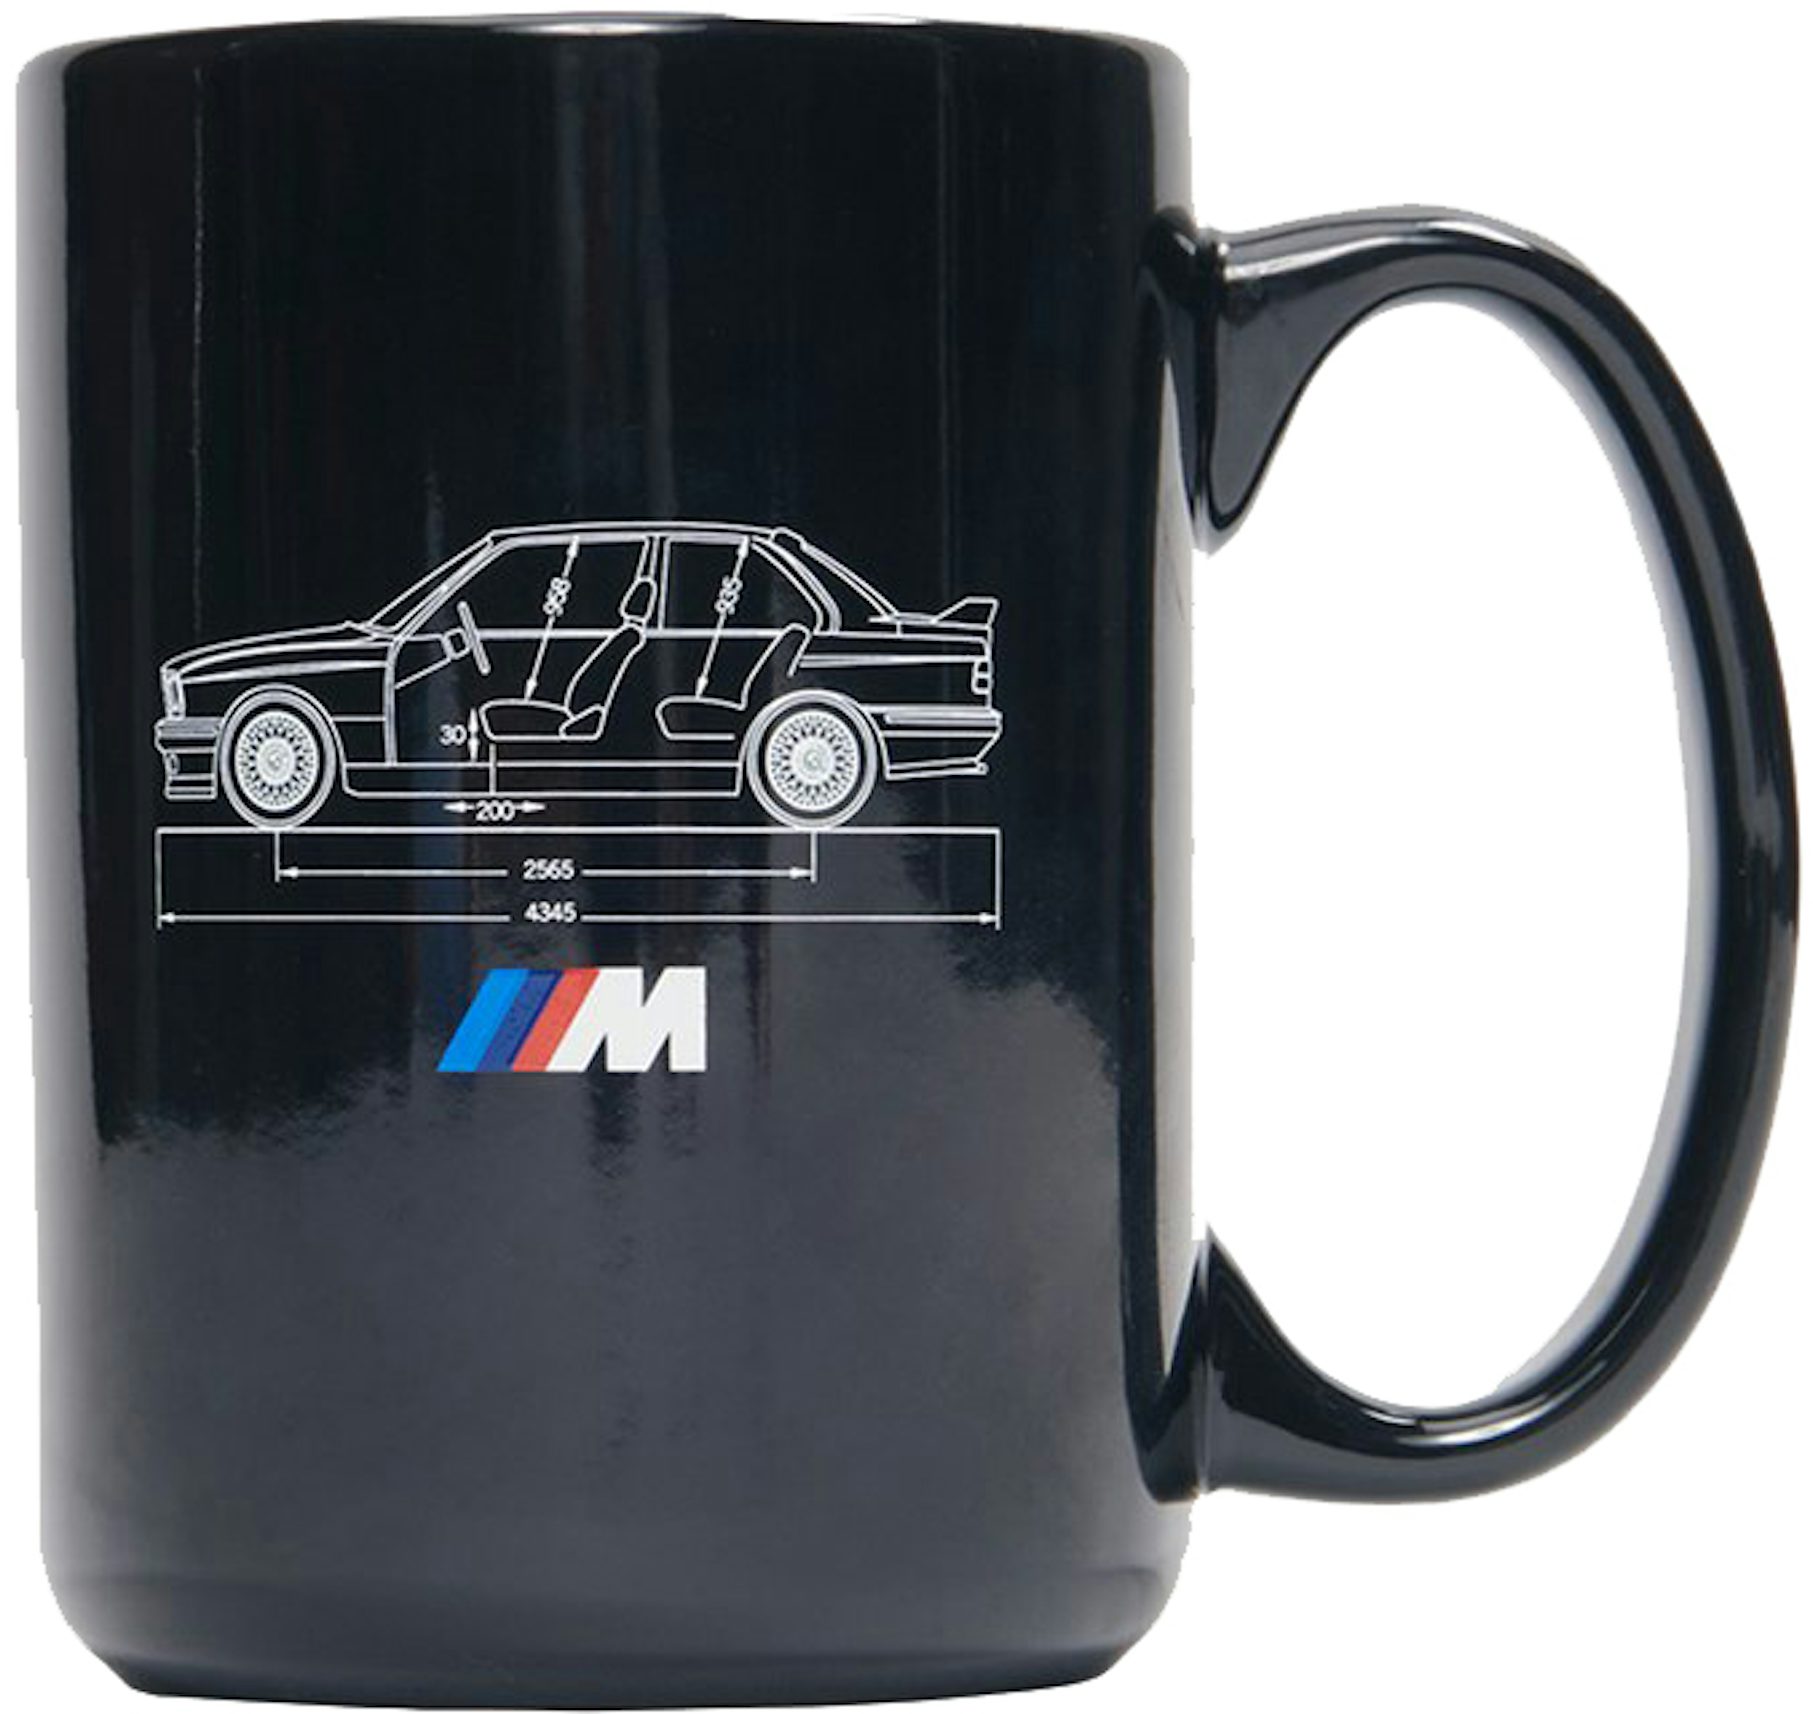 Kith x BMW Sketch Mug Black - FW20 - US